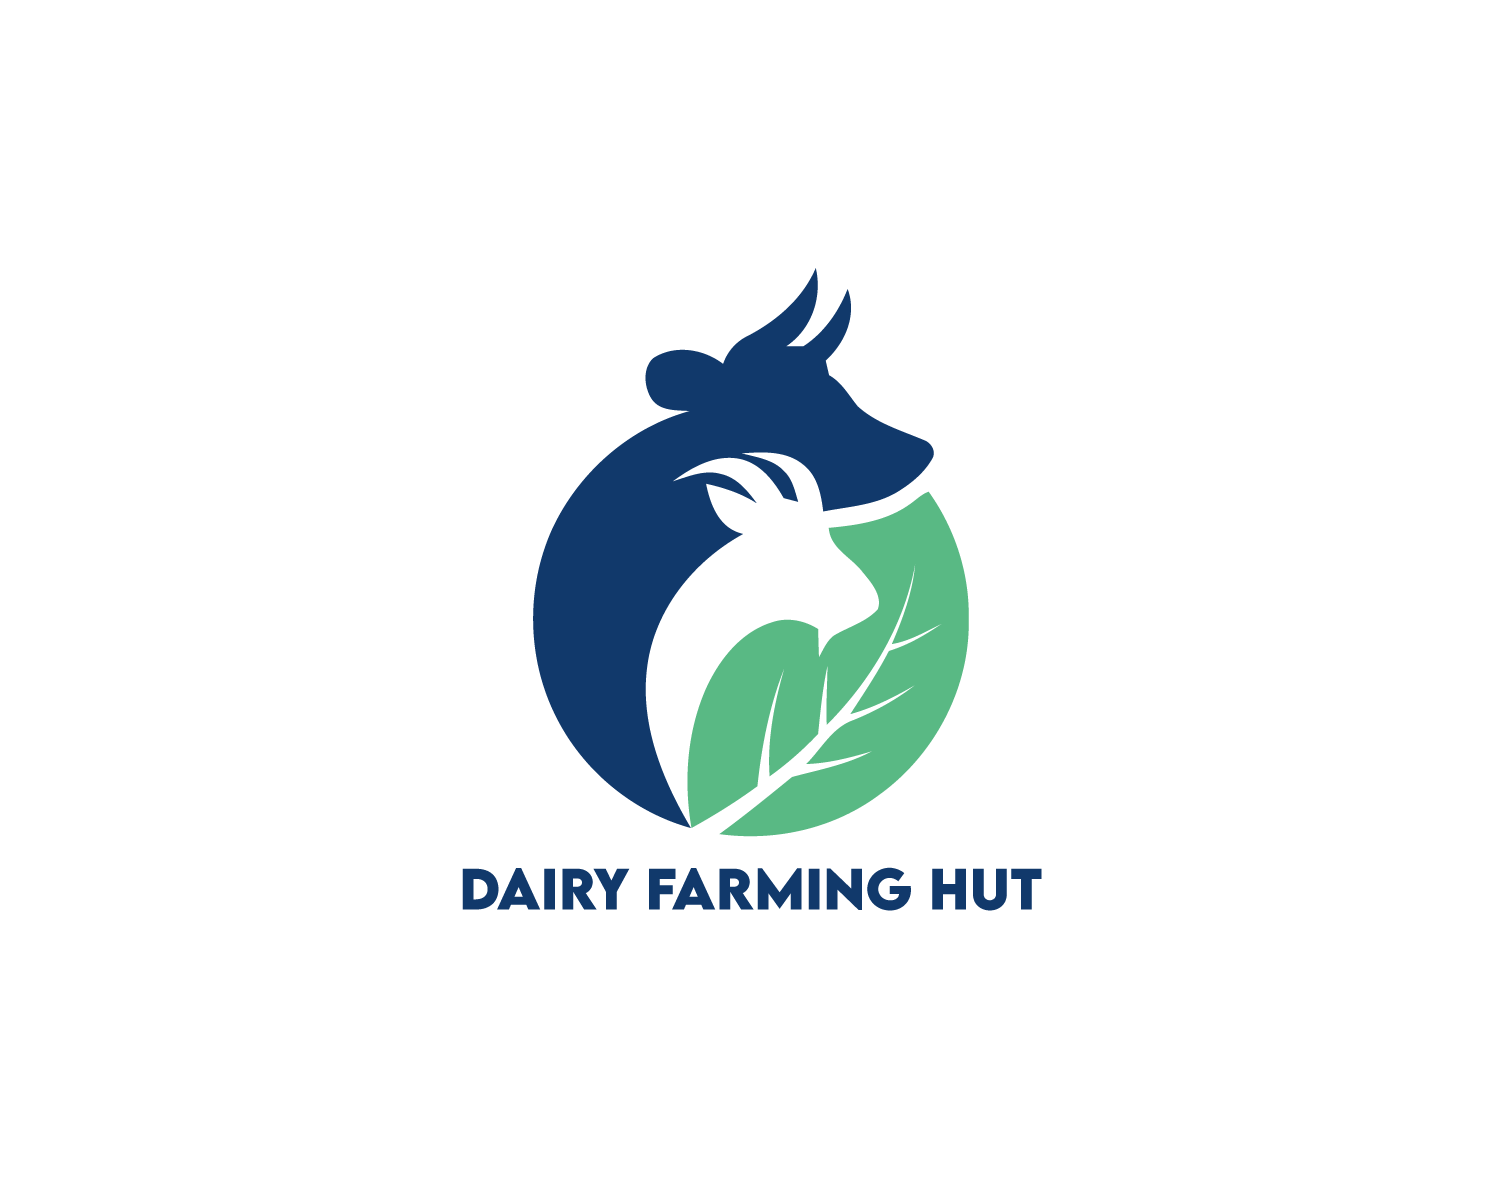 Dairy farming hut logo